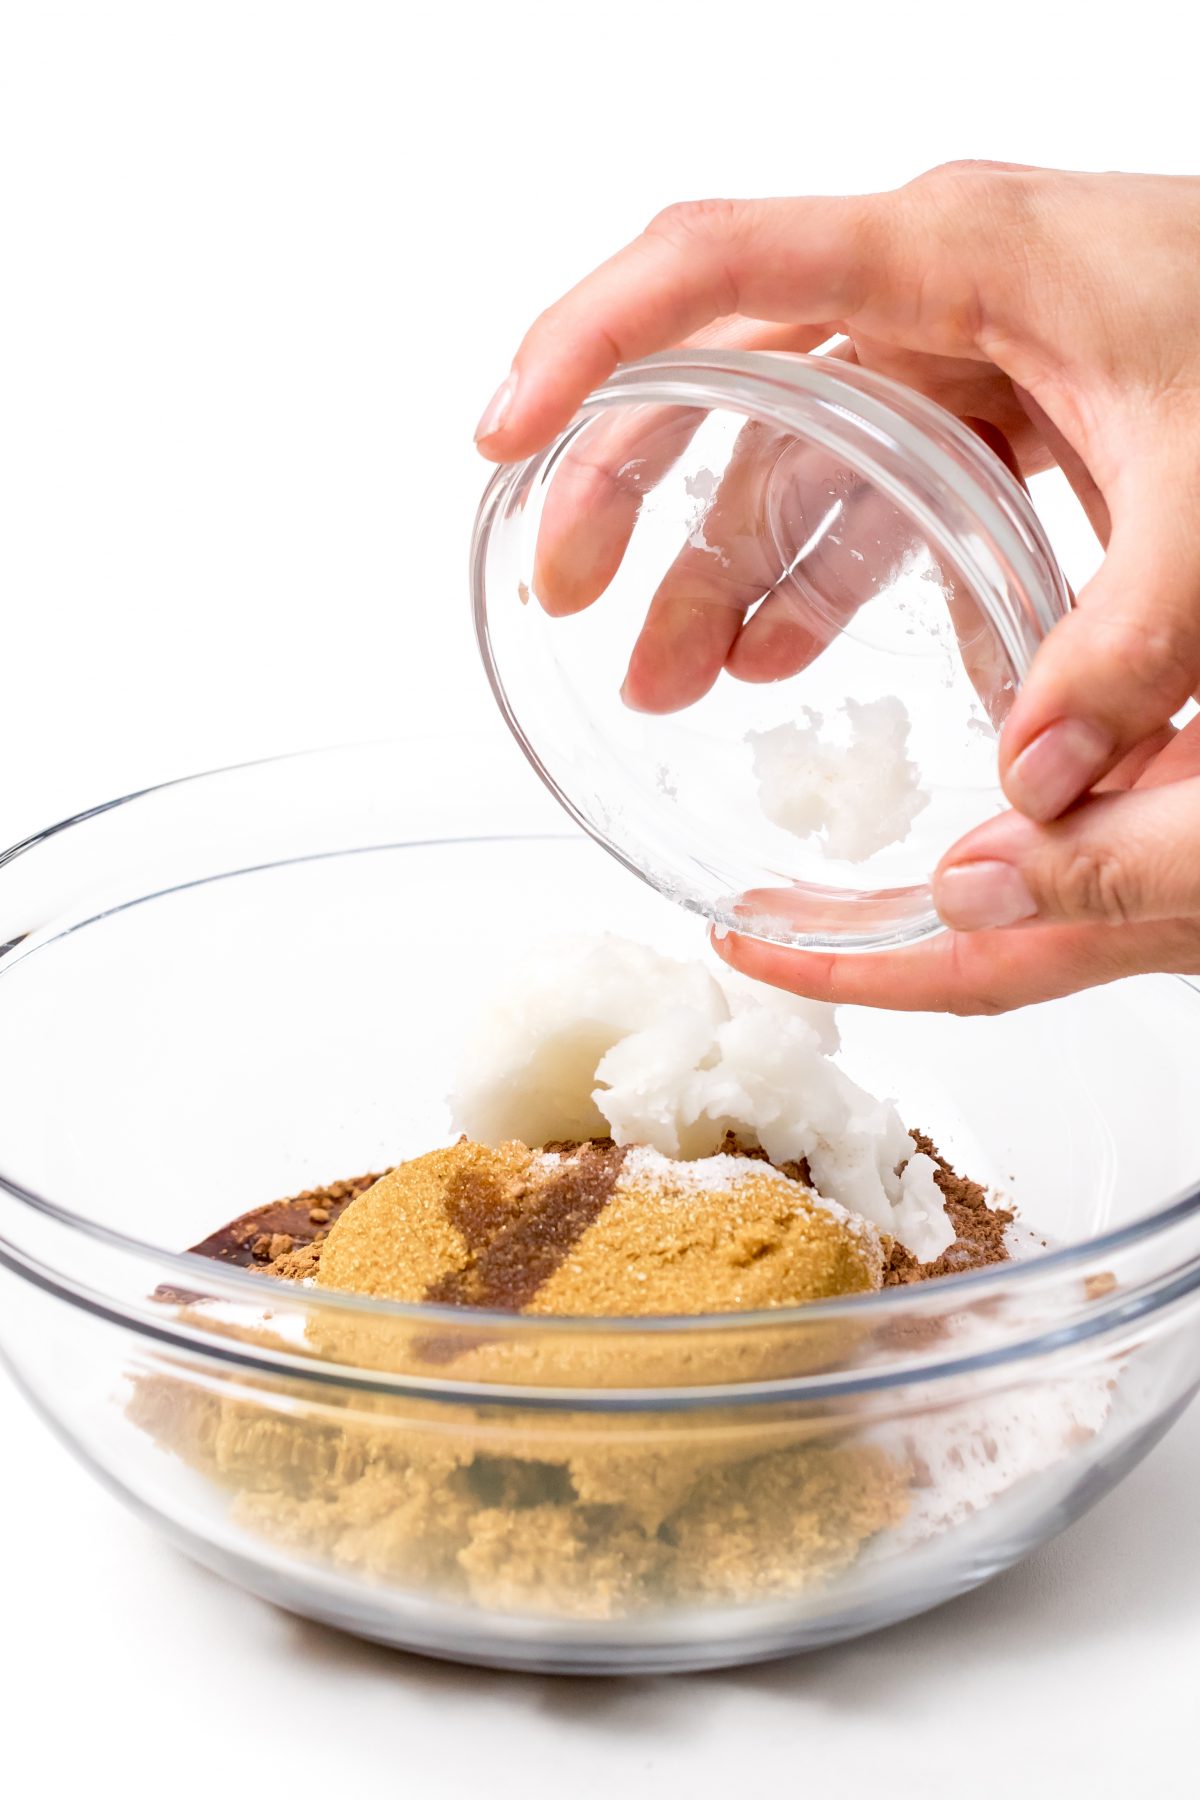  Chocolate sugar scrub - pouring coconut oil into mixing bowl